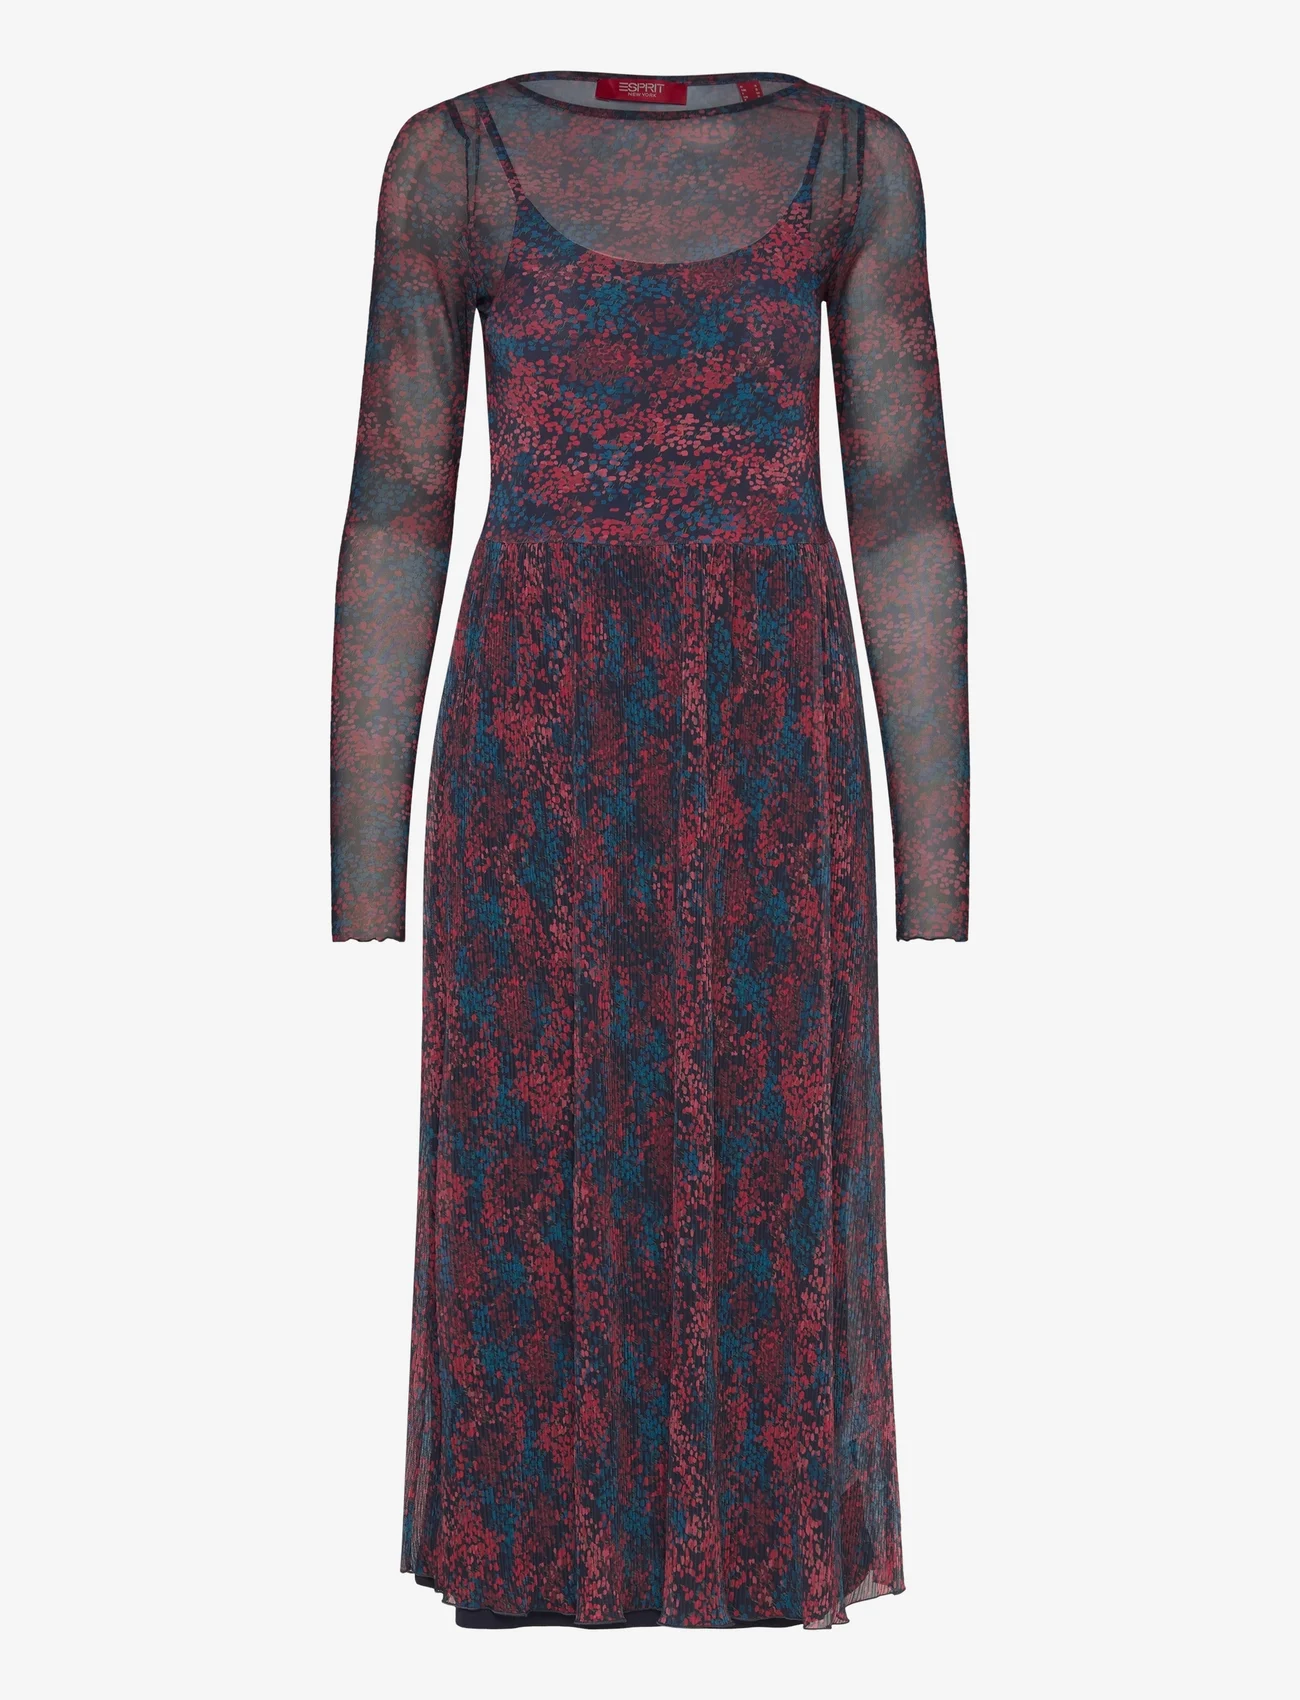 Esprit Casual - Dresses knitted - summer dresses - dark blue - 0